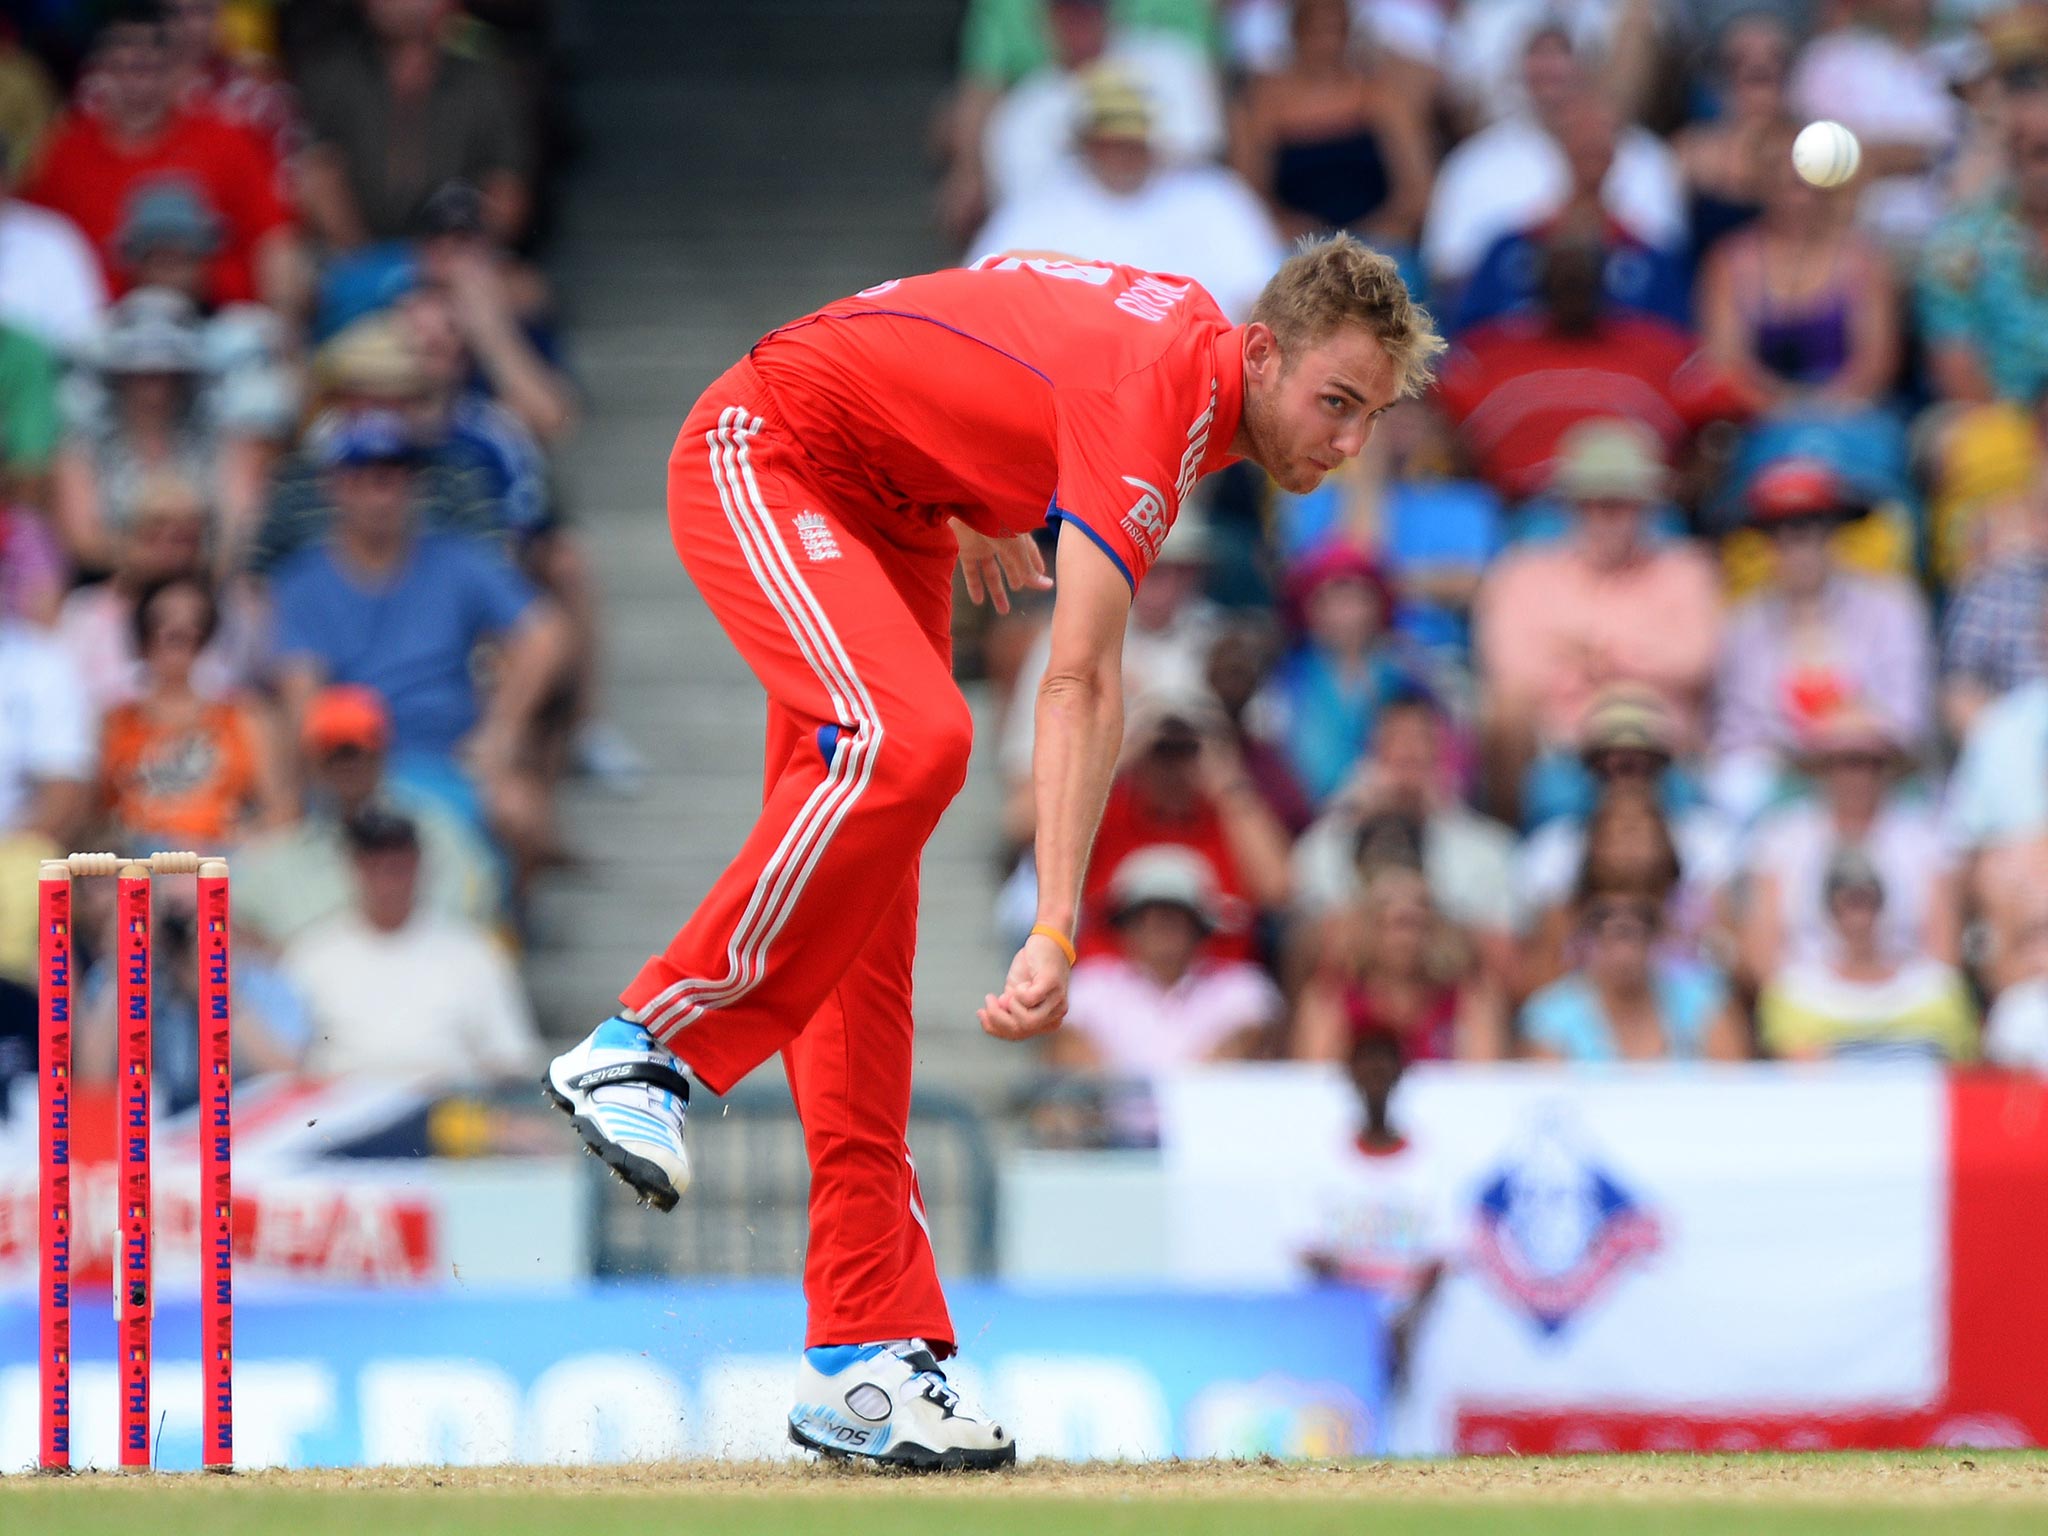 England Twenty20 captain Stuart Broad is suffering from patella tendinitis